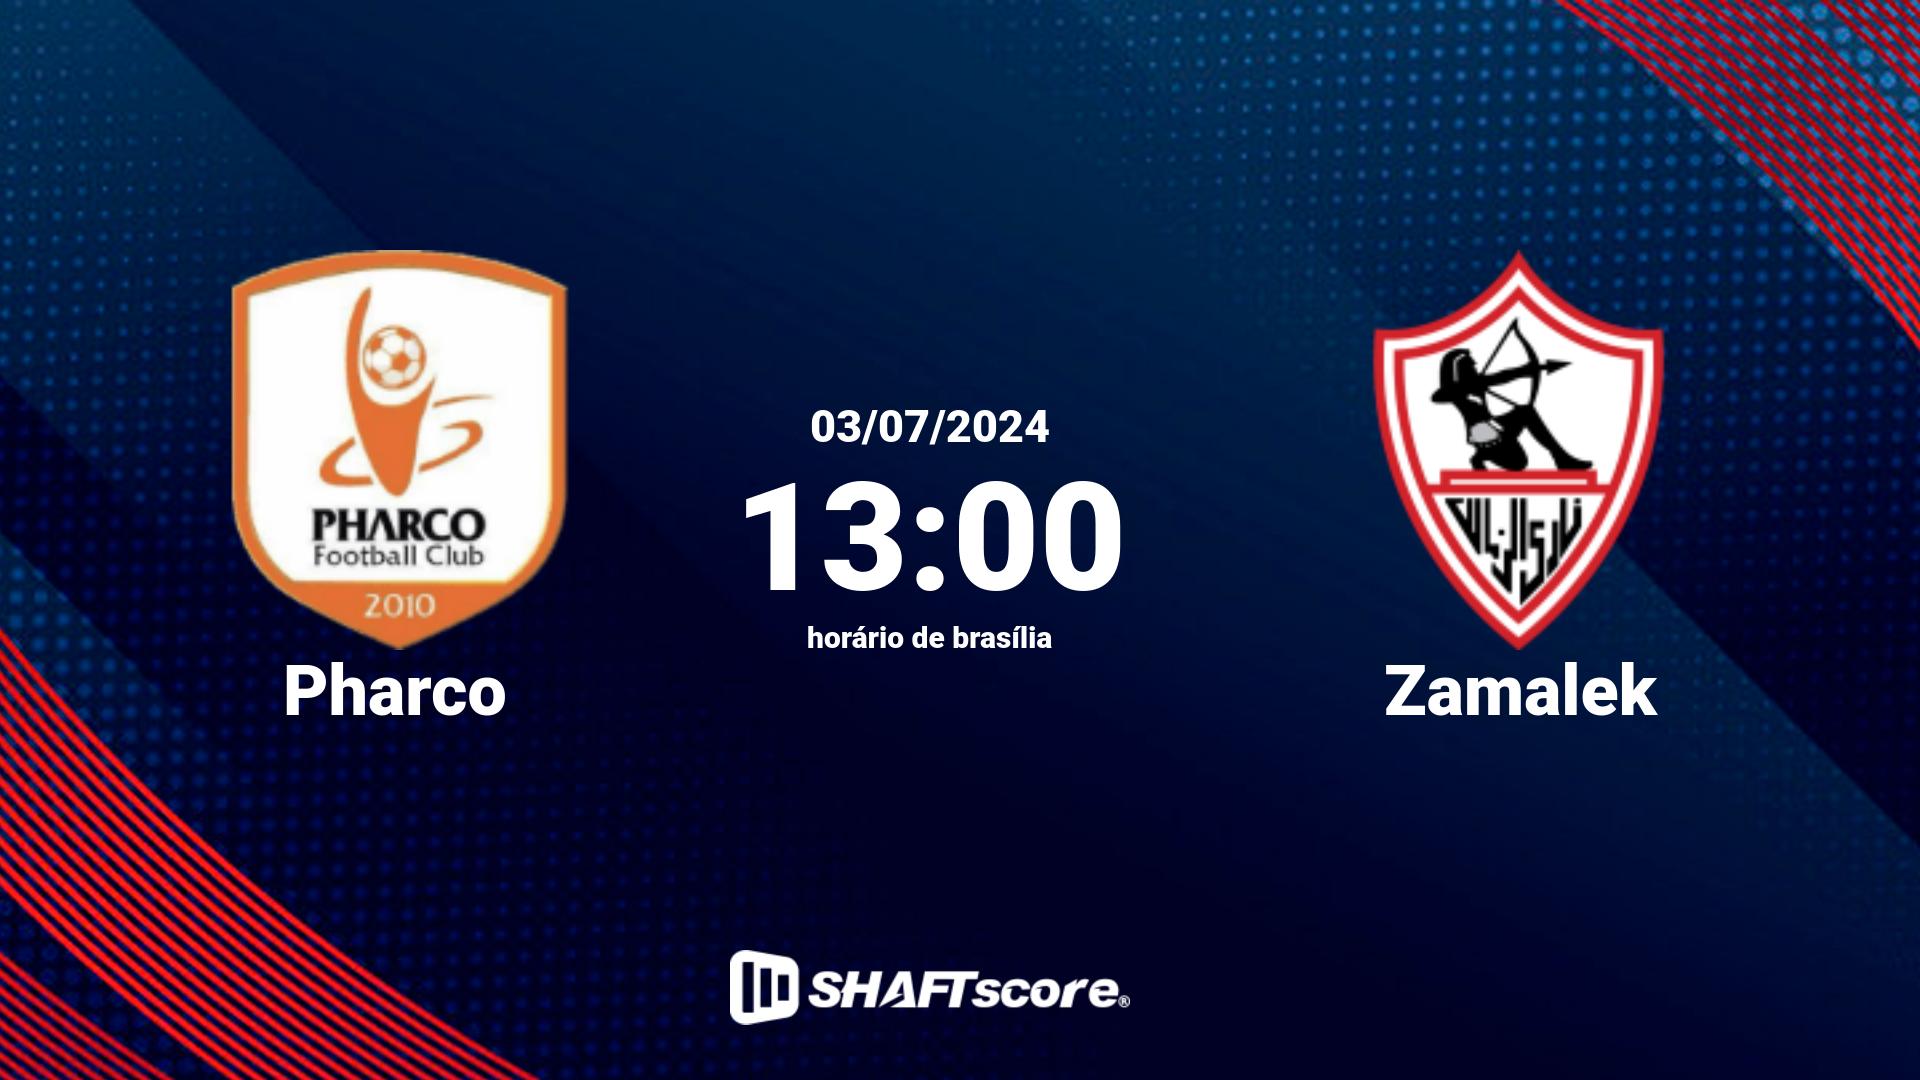 Estatísticas do jogo Pharco vs Zamalek 03.07 13:00